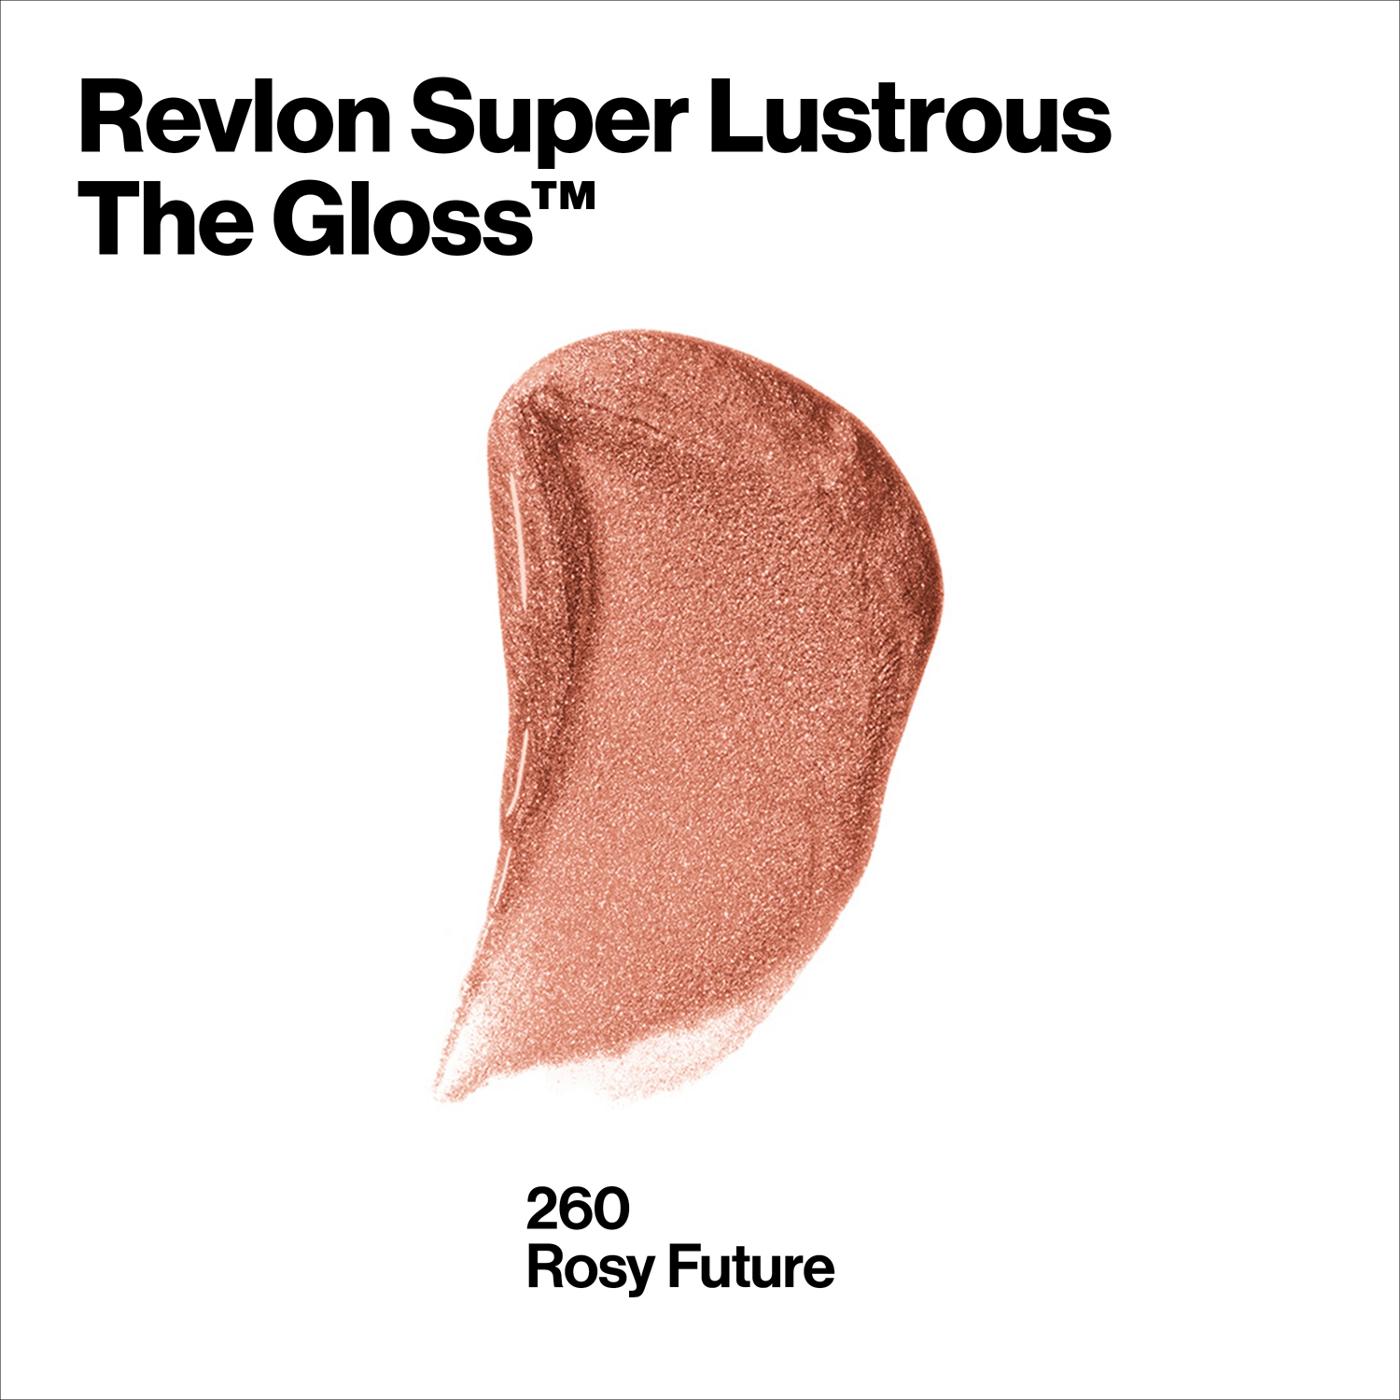 Revlon Super Lustrous The Gloss, Rosy Future; image 6 of 9